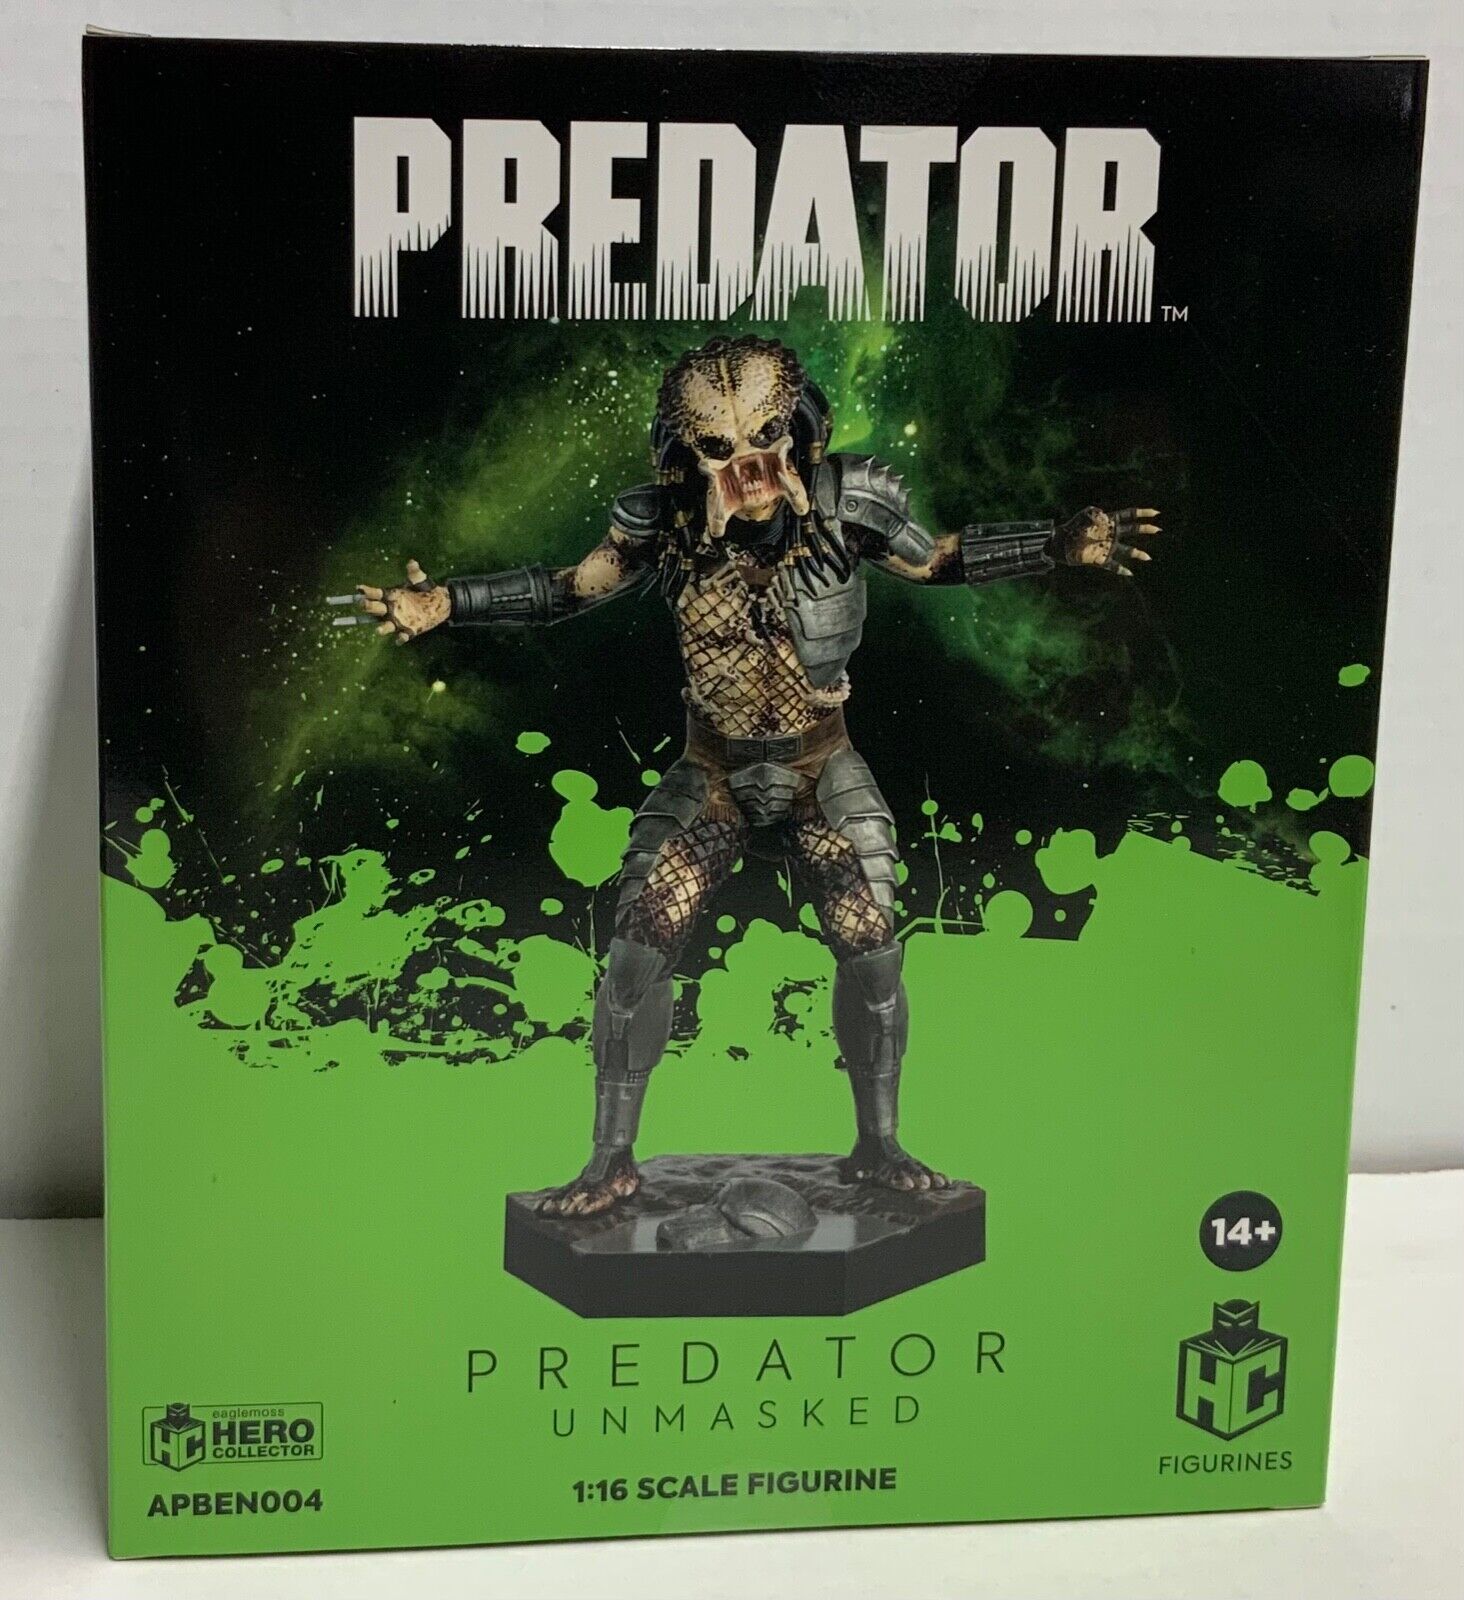 Predator Unmasked APBEN004 1:16 Scale Figurine Hero Collector Eaglemoss NEW